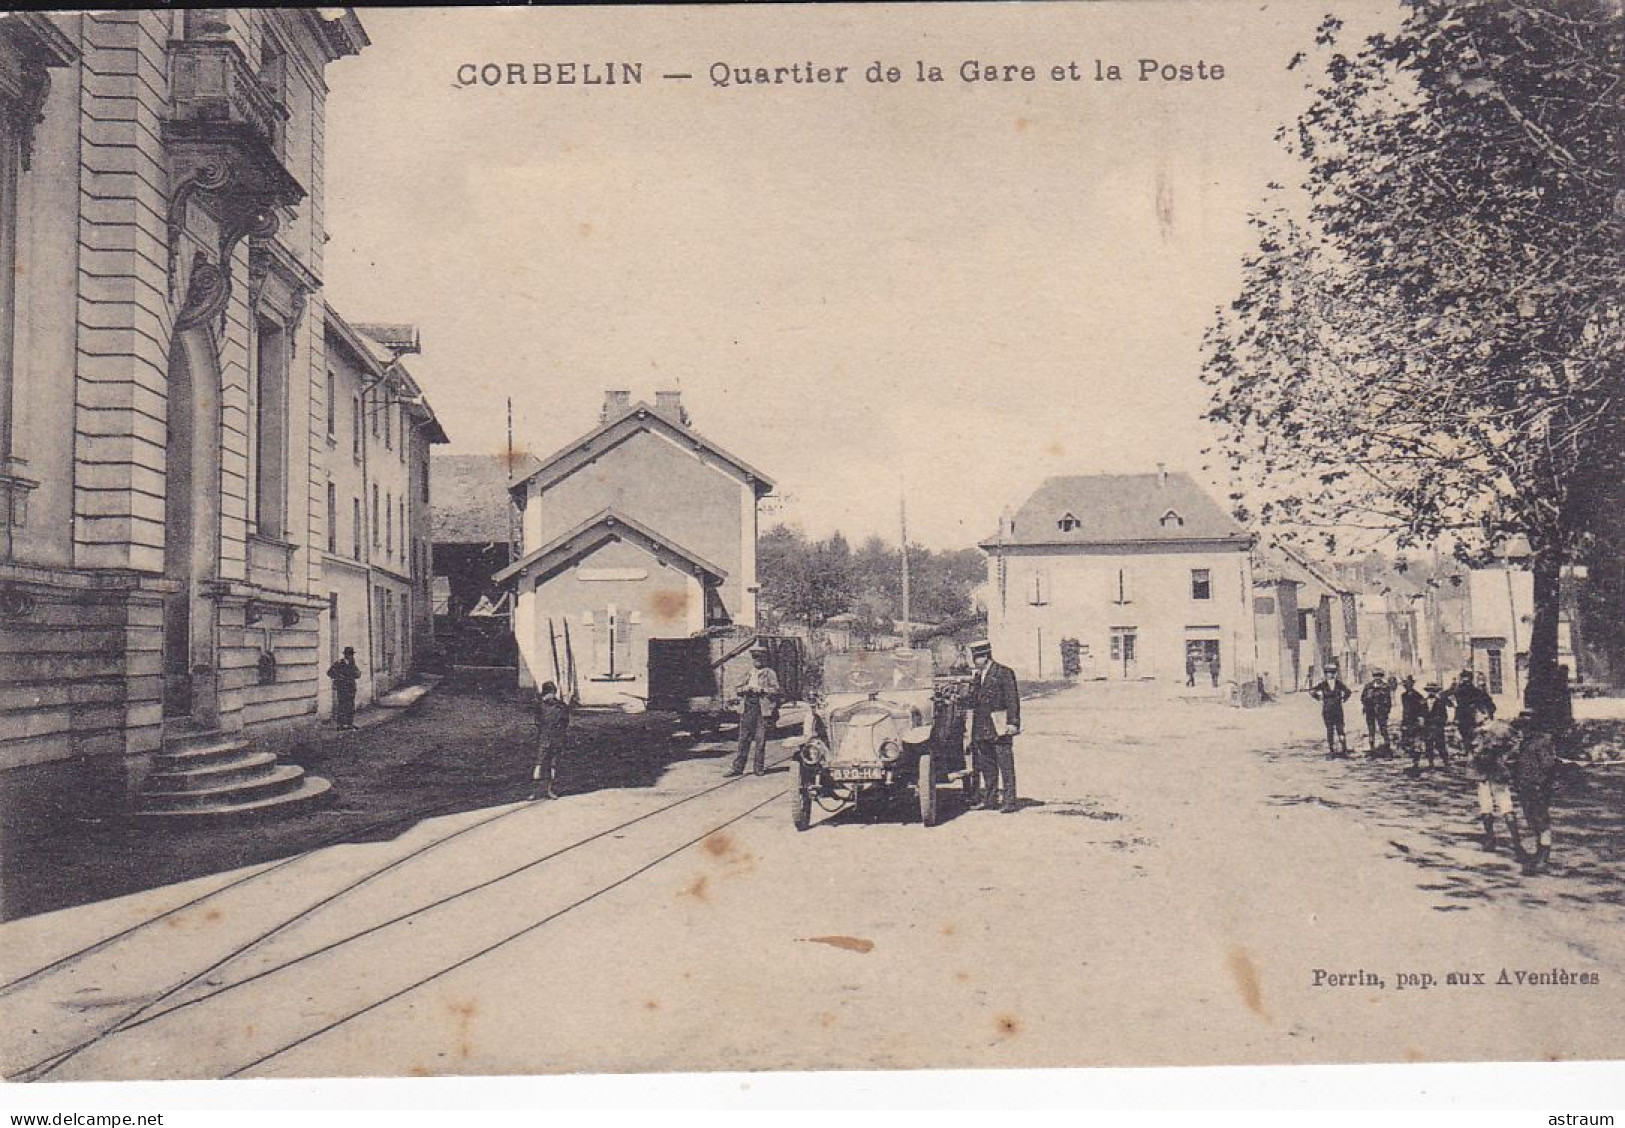 Cpa - 38 - Corbelin -peu Courante- Animée - Quartier De La Gare - Voiture - Edi Perrin - Corbelin